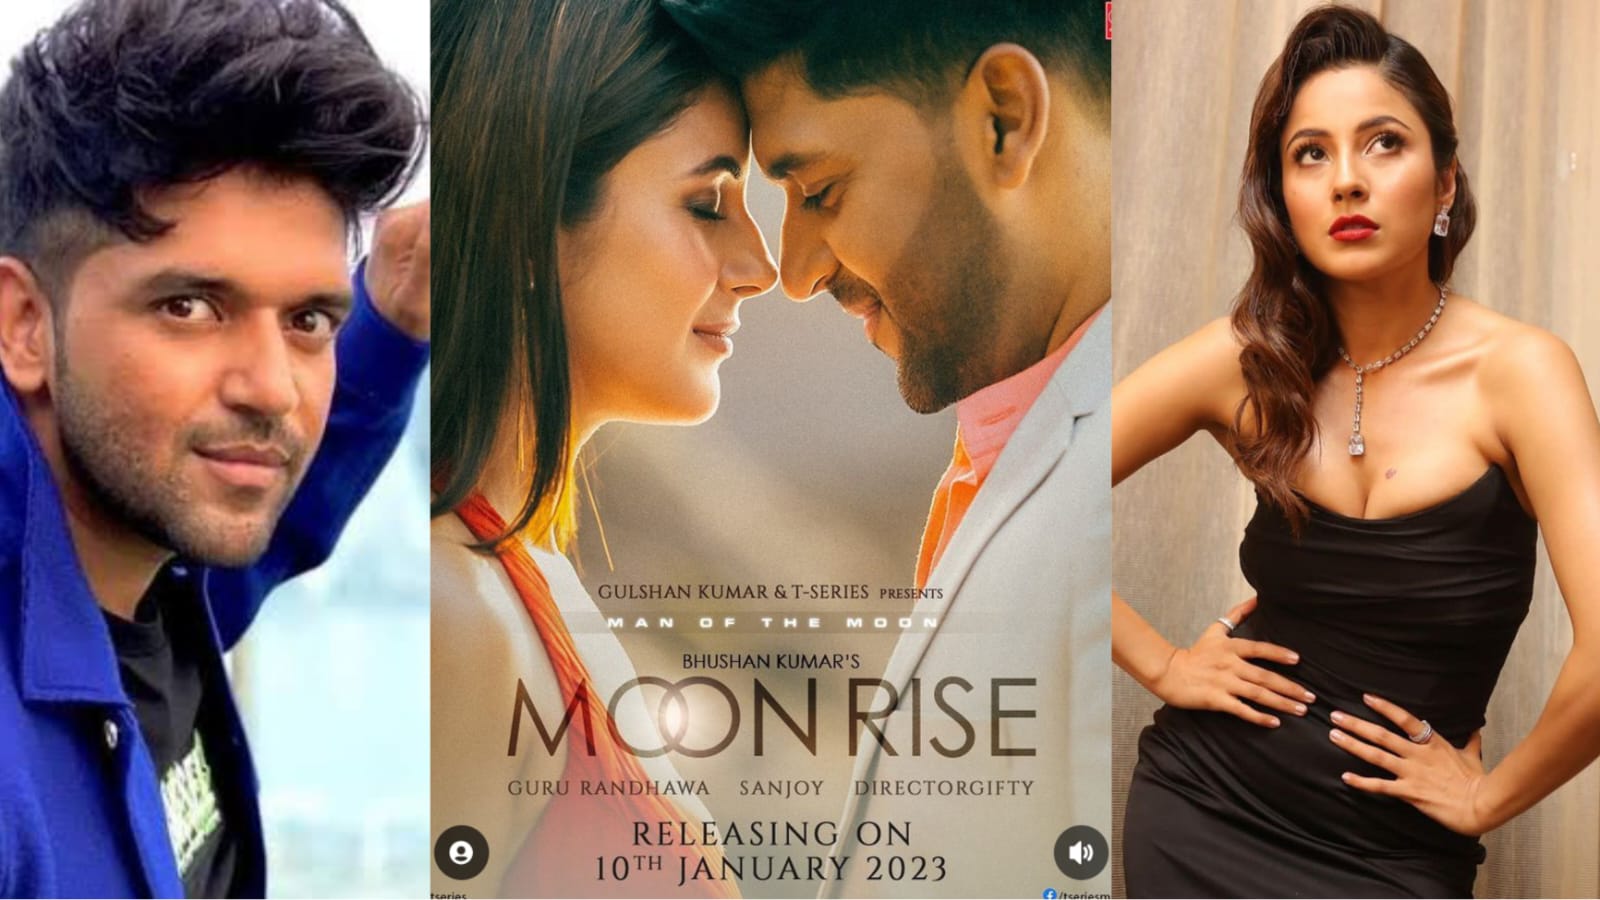 Shehnaaz Gill & Guru Randhawa song ‘Moon Rise’ poster out now